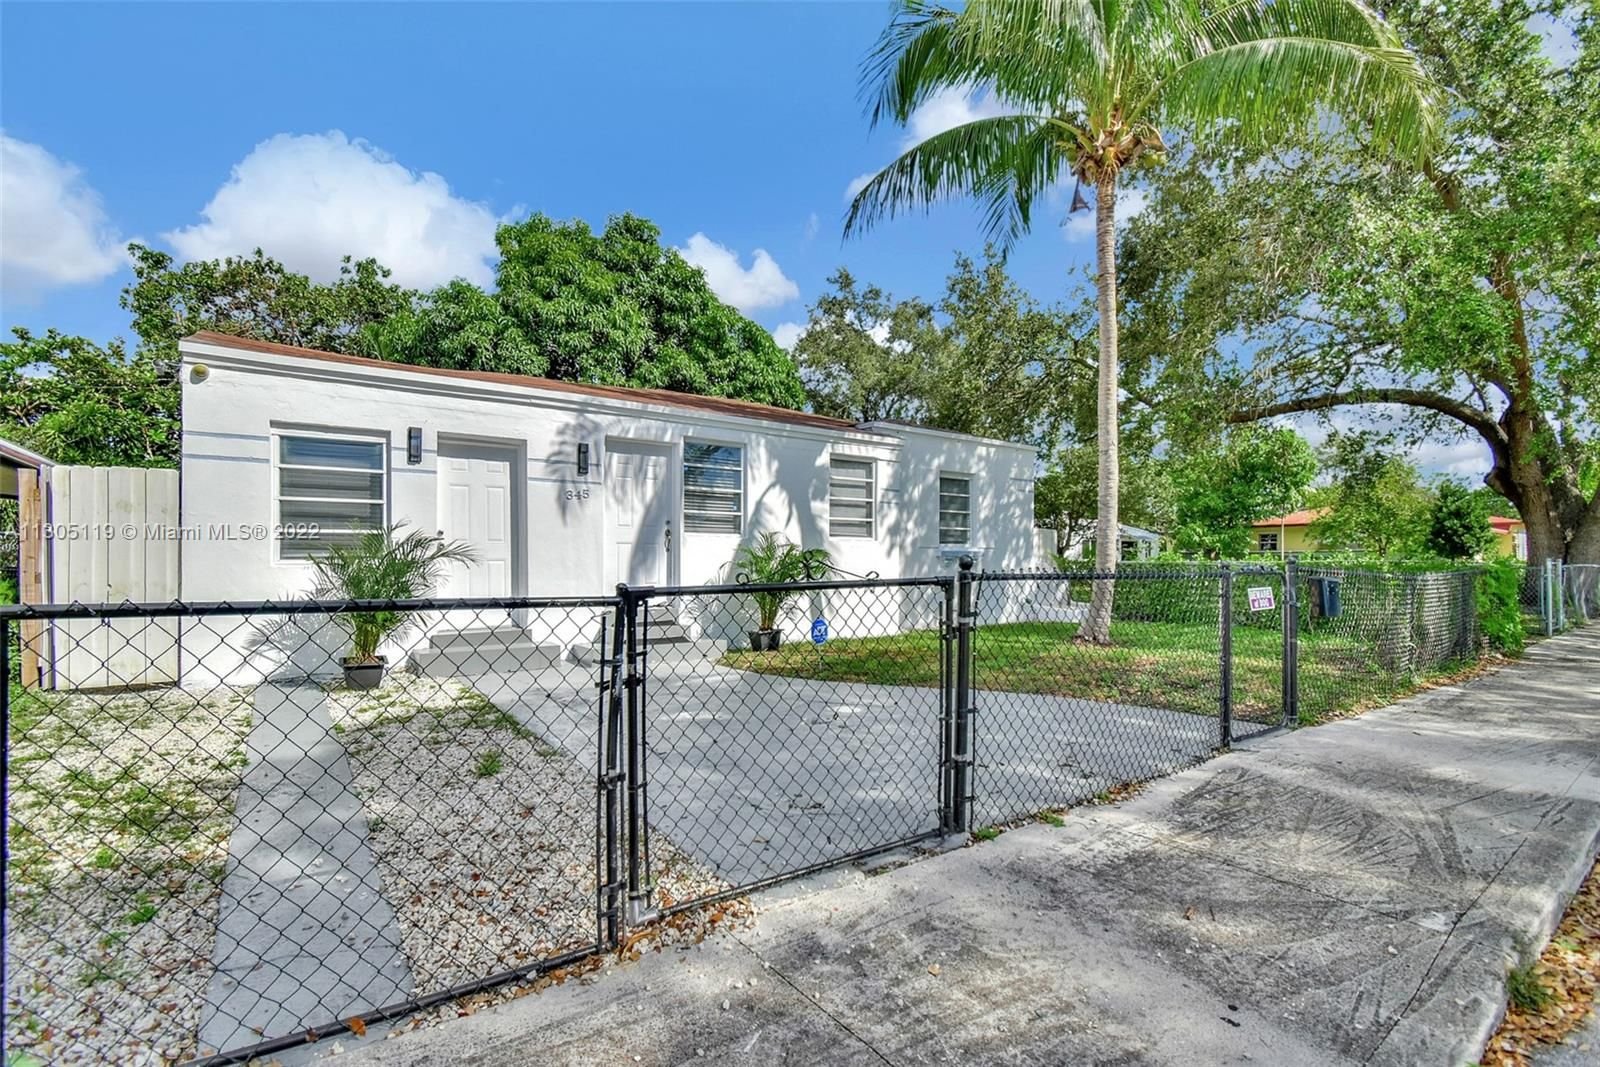 Real estate property located at 345 44th St, Miami-Dade County, Miami, FL